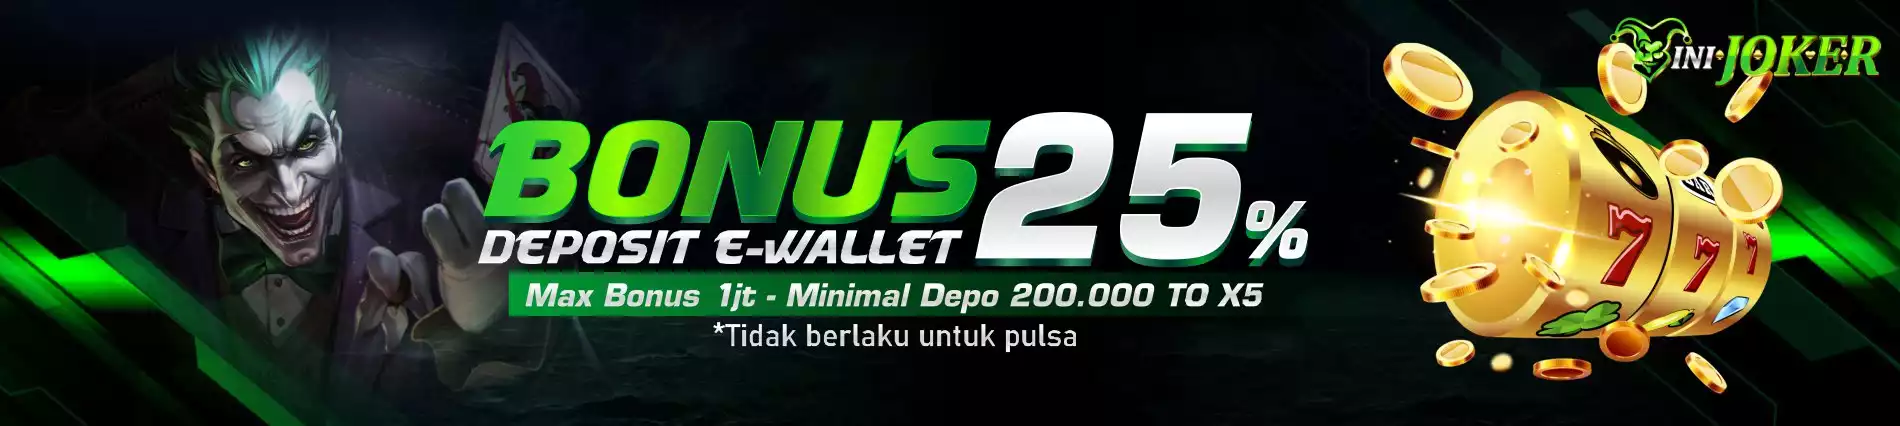 Bonus Deposit E-Wallet 25%